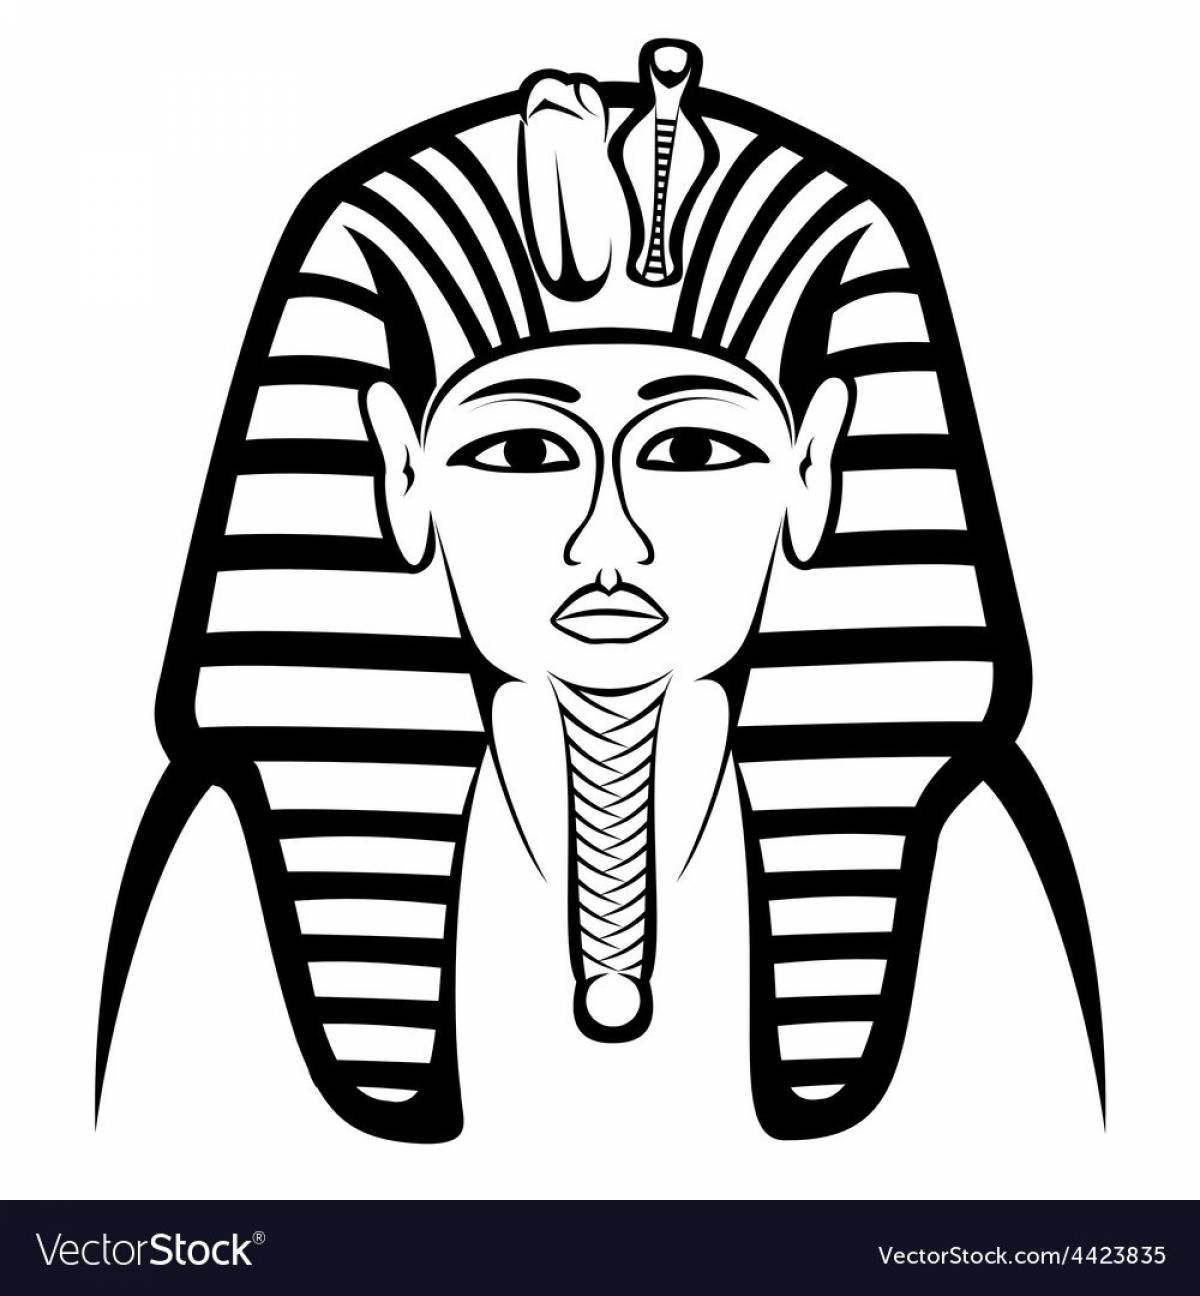 Mask of the pharaoh tutankhamen from class 5 #8